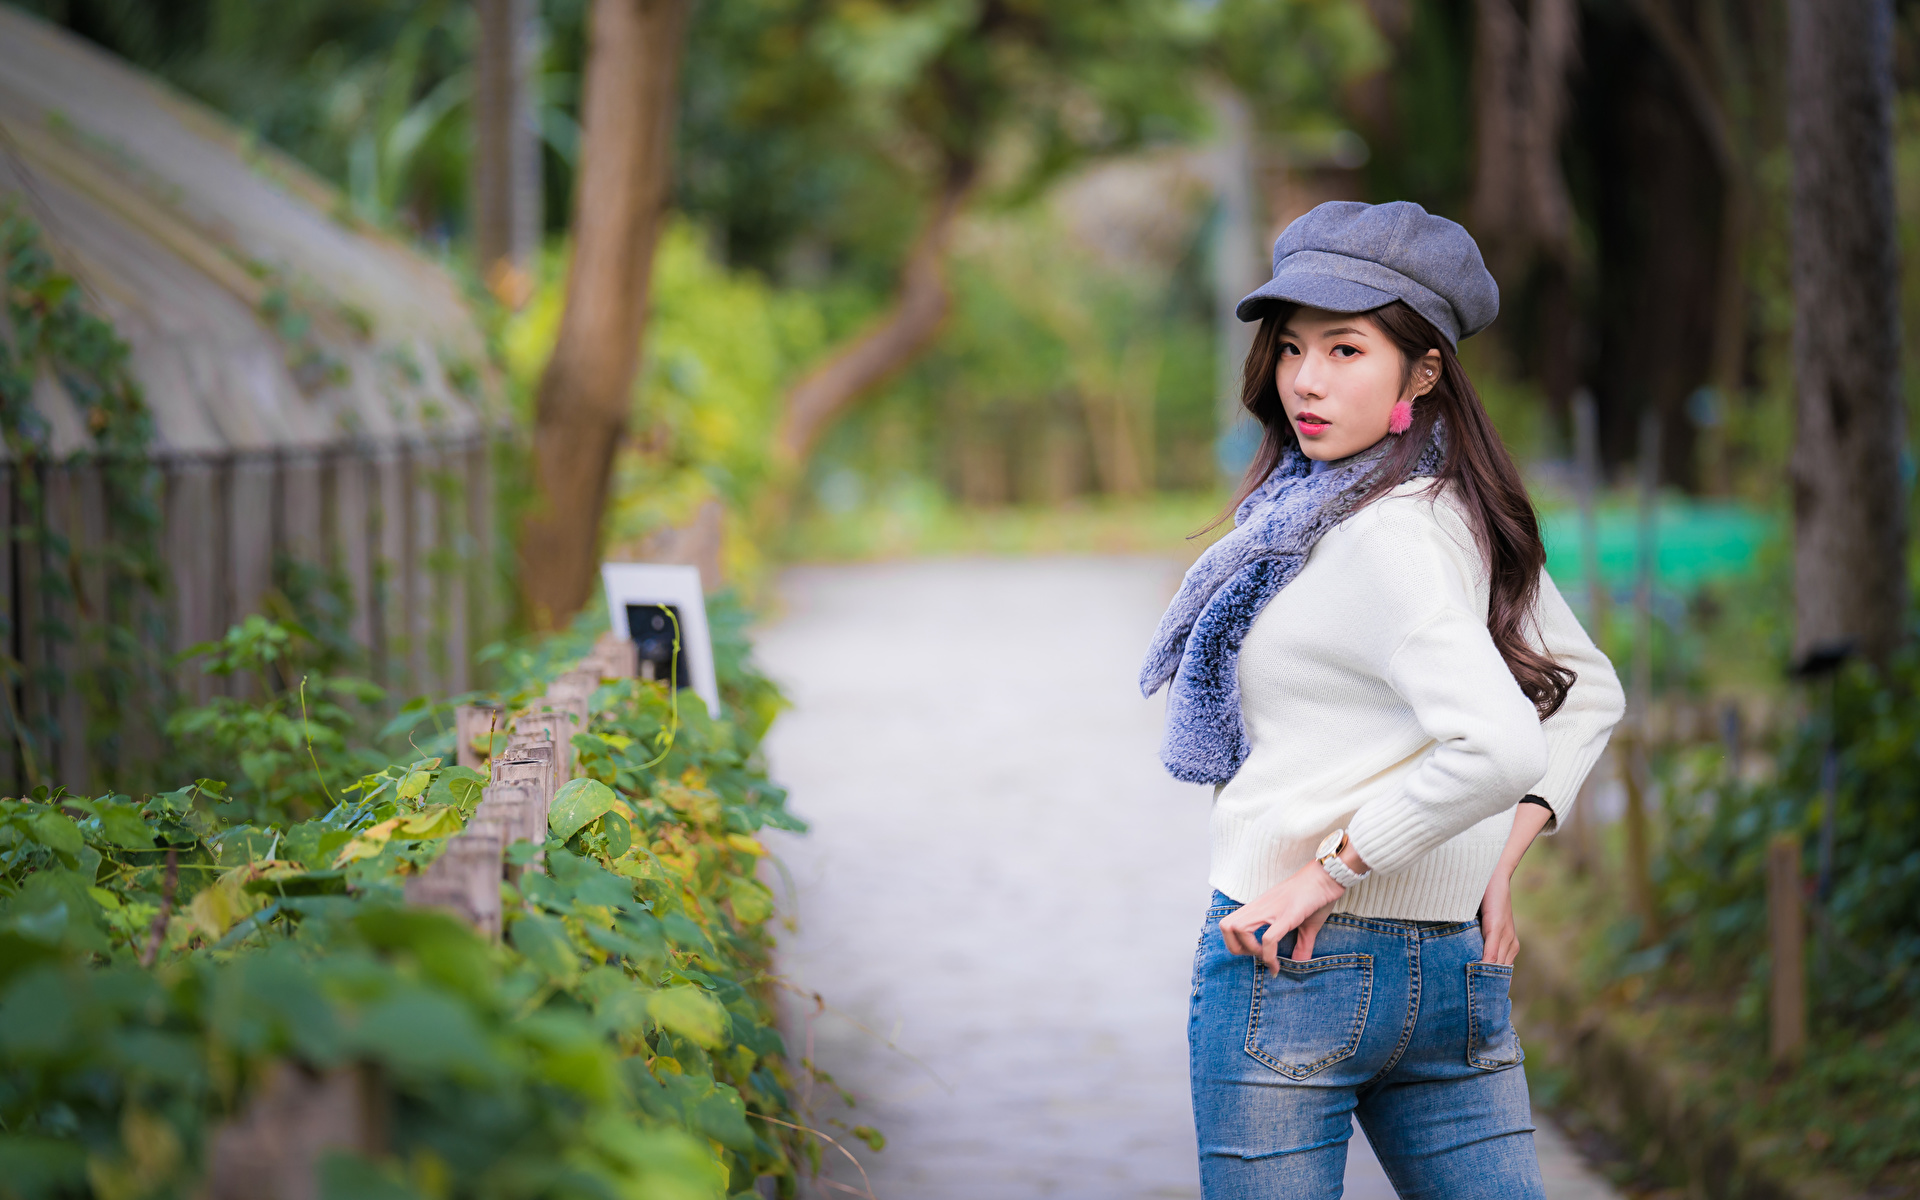 Young Girl Short Jeans Posing Garden Stock Photo 785955637 | Shutterstock